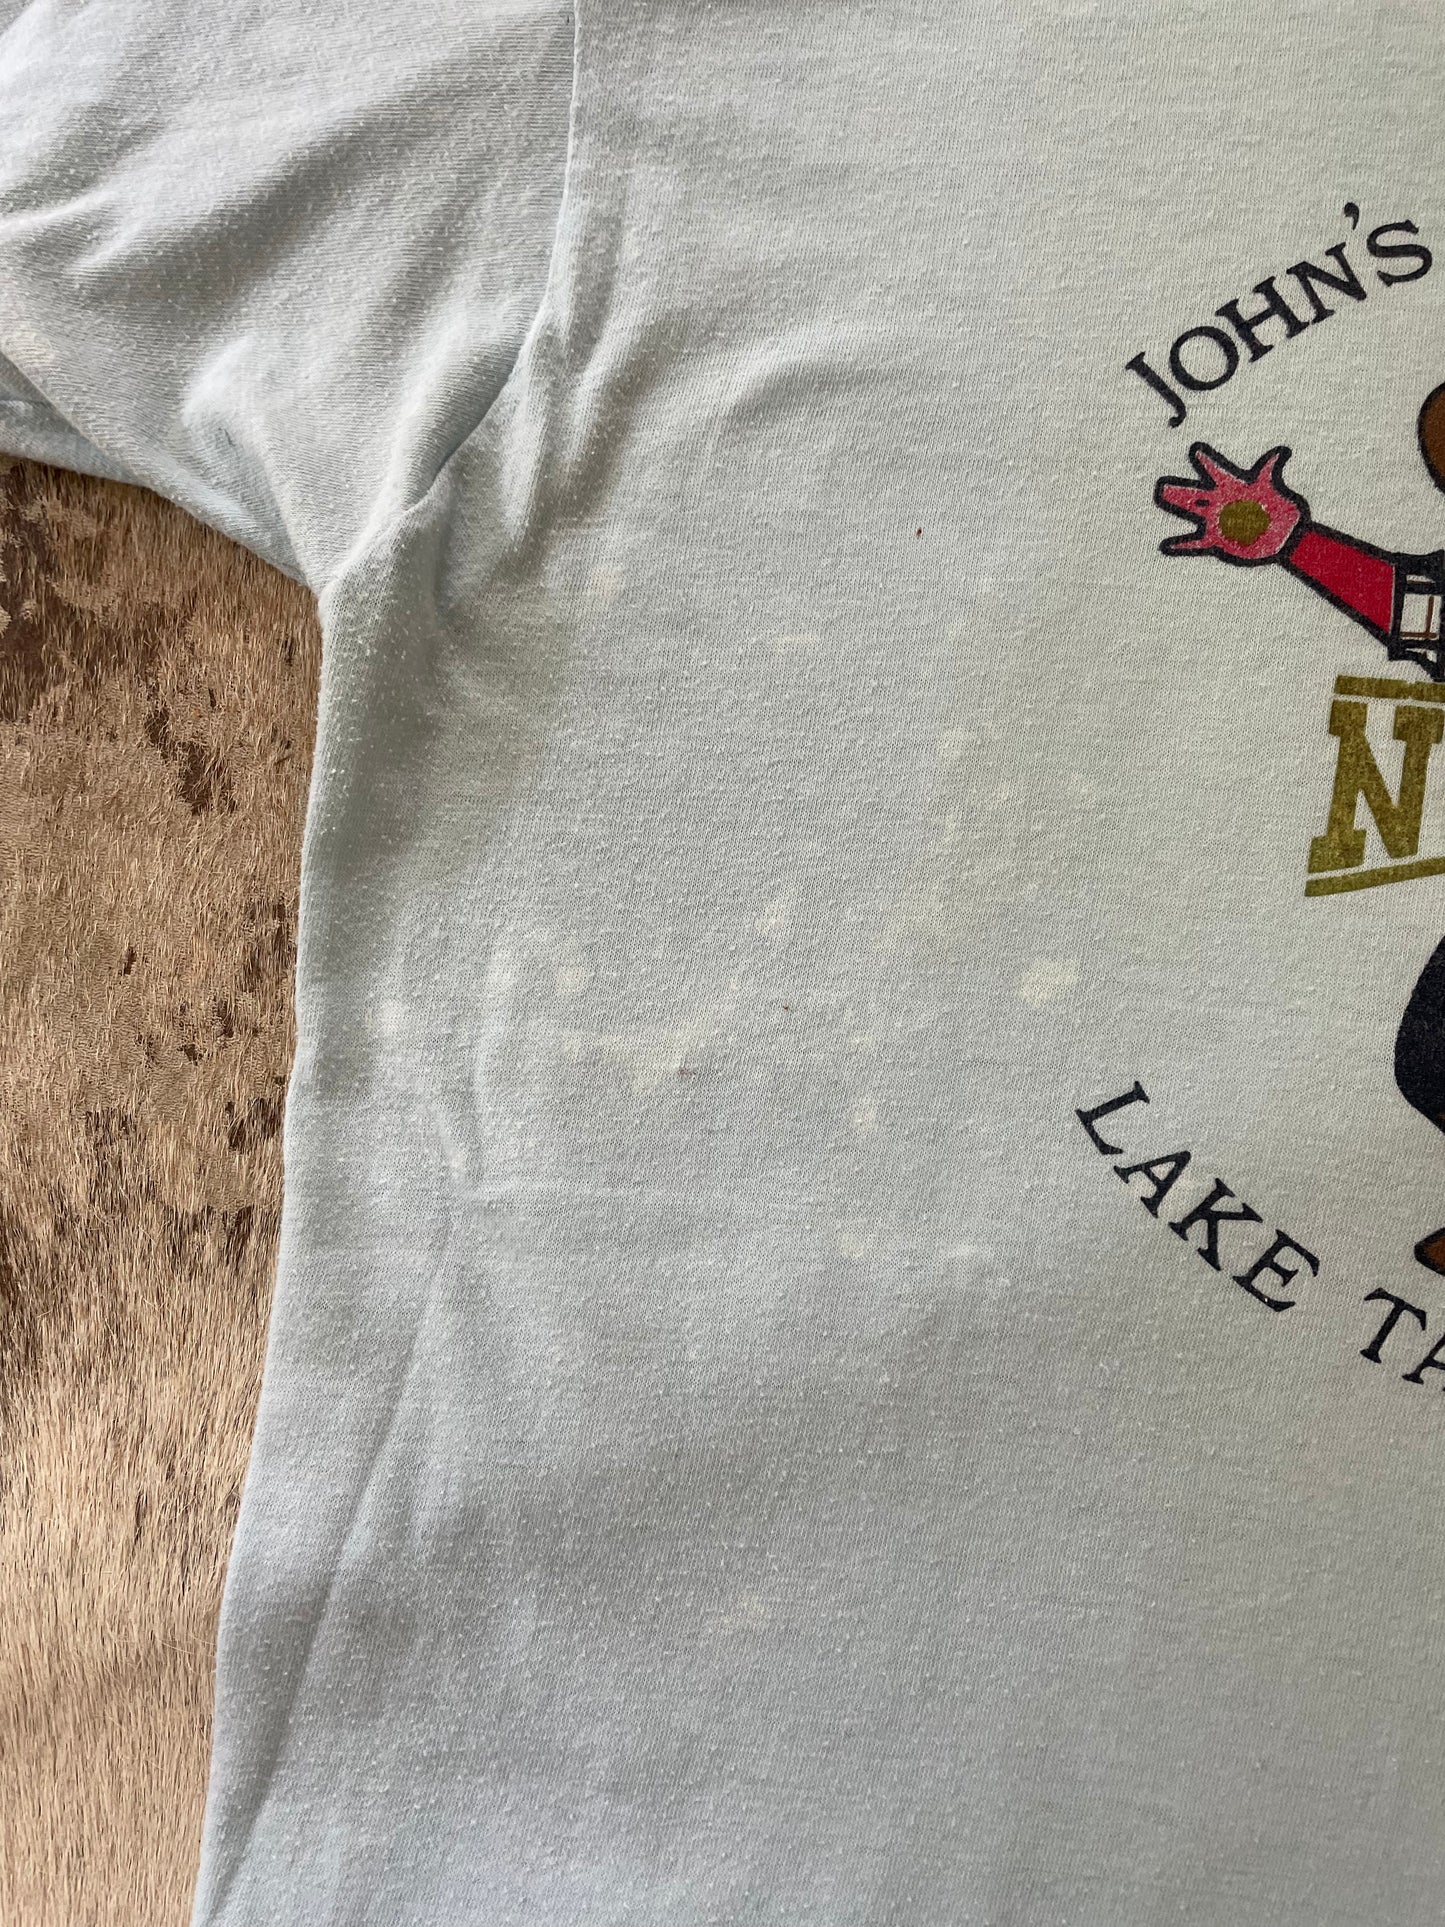 80s John’s Tahoe Nugget Casino Tee